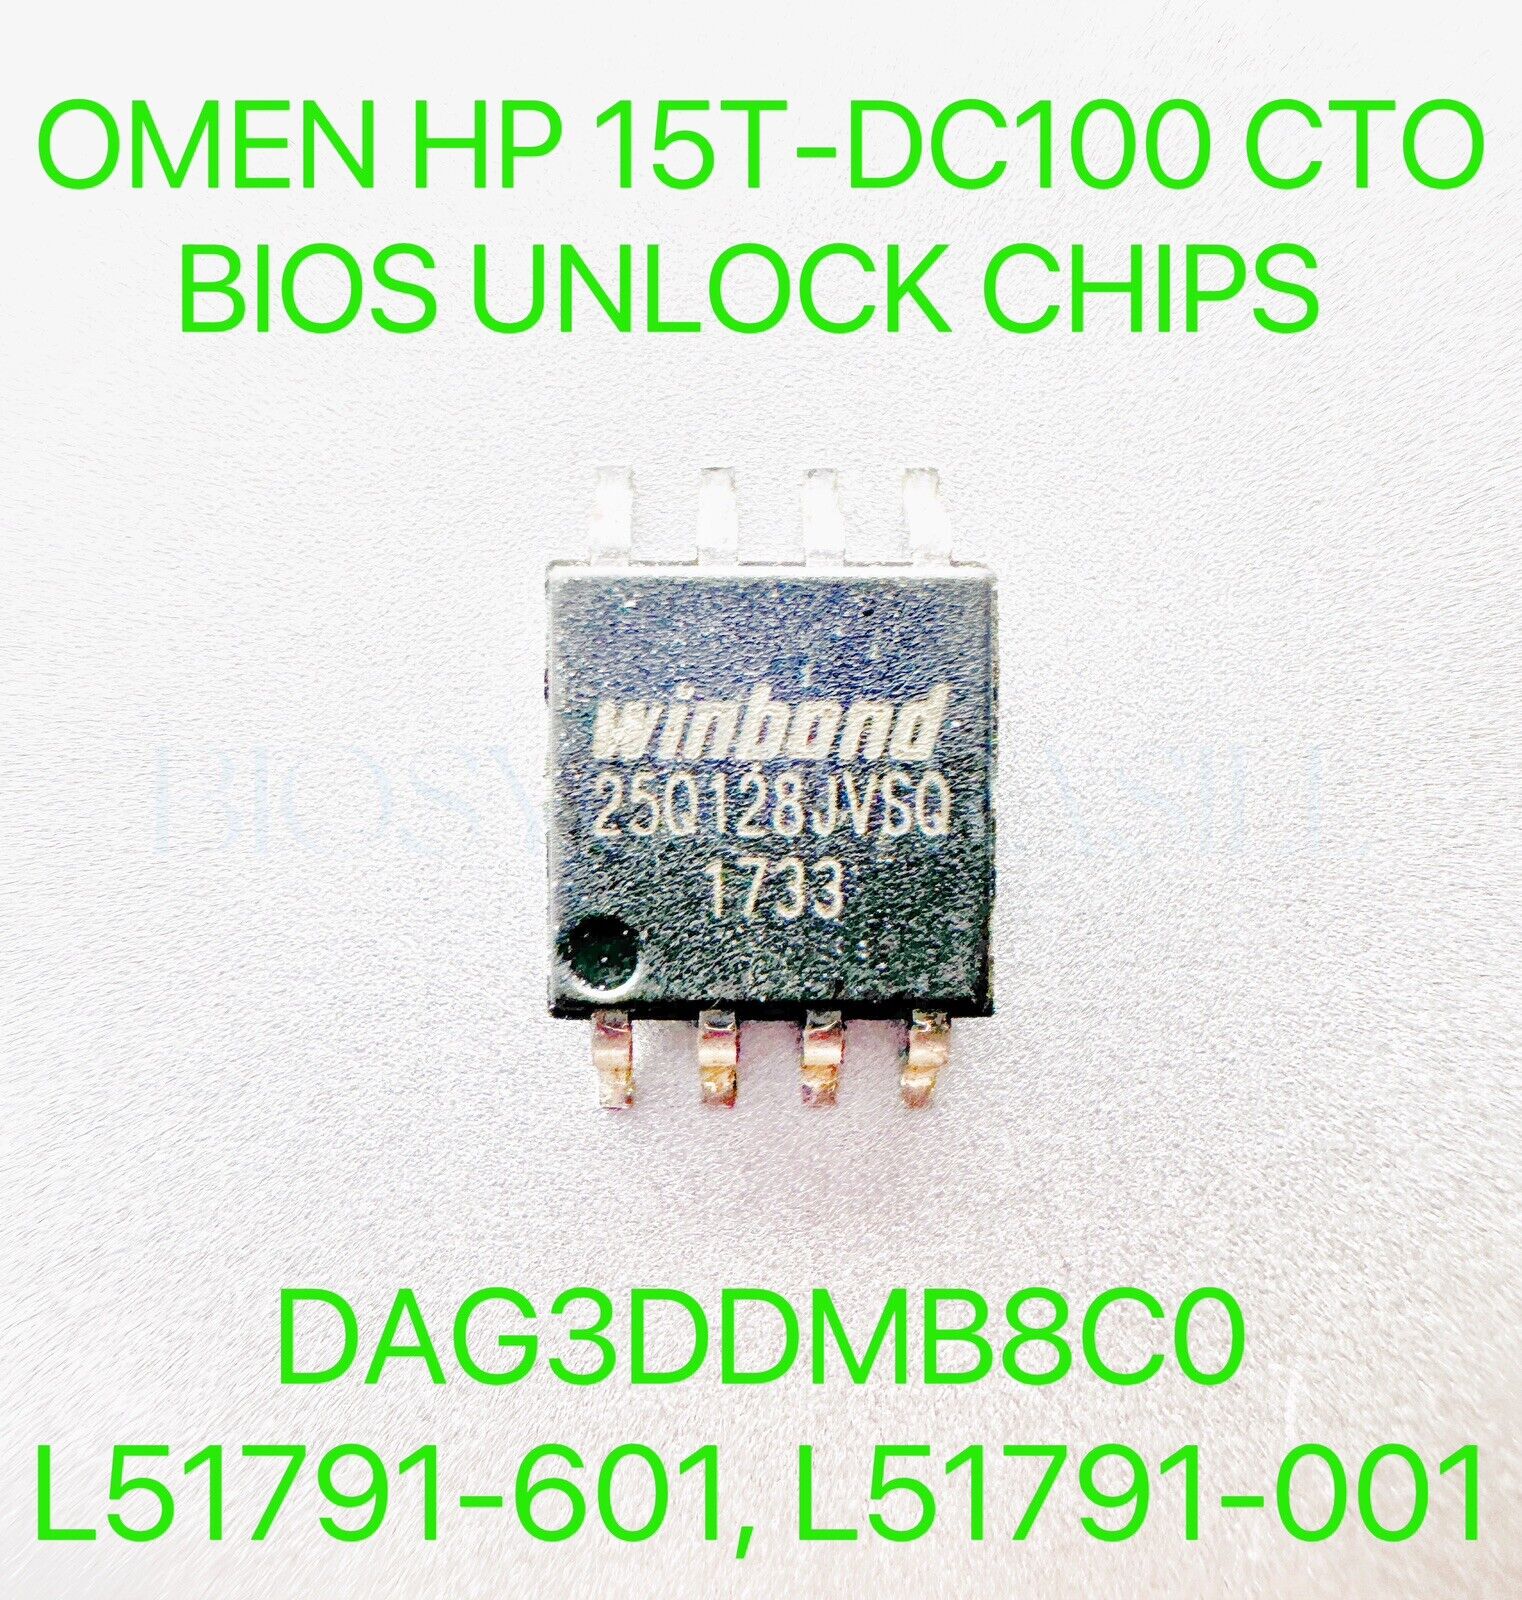 OMEN HP 15T-DC100 CTO, SERIES, ADMIN BIOS PASSWORD UNLOCK CHIP DAG3DDMB8C0